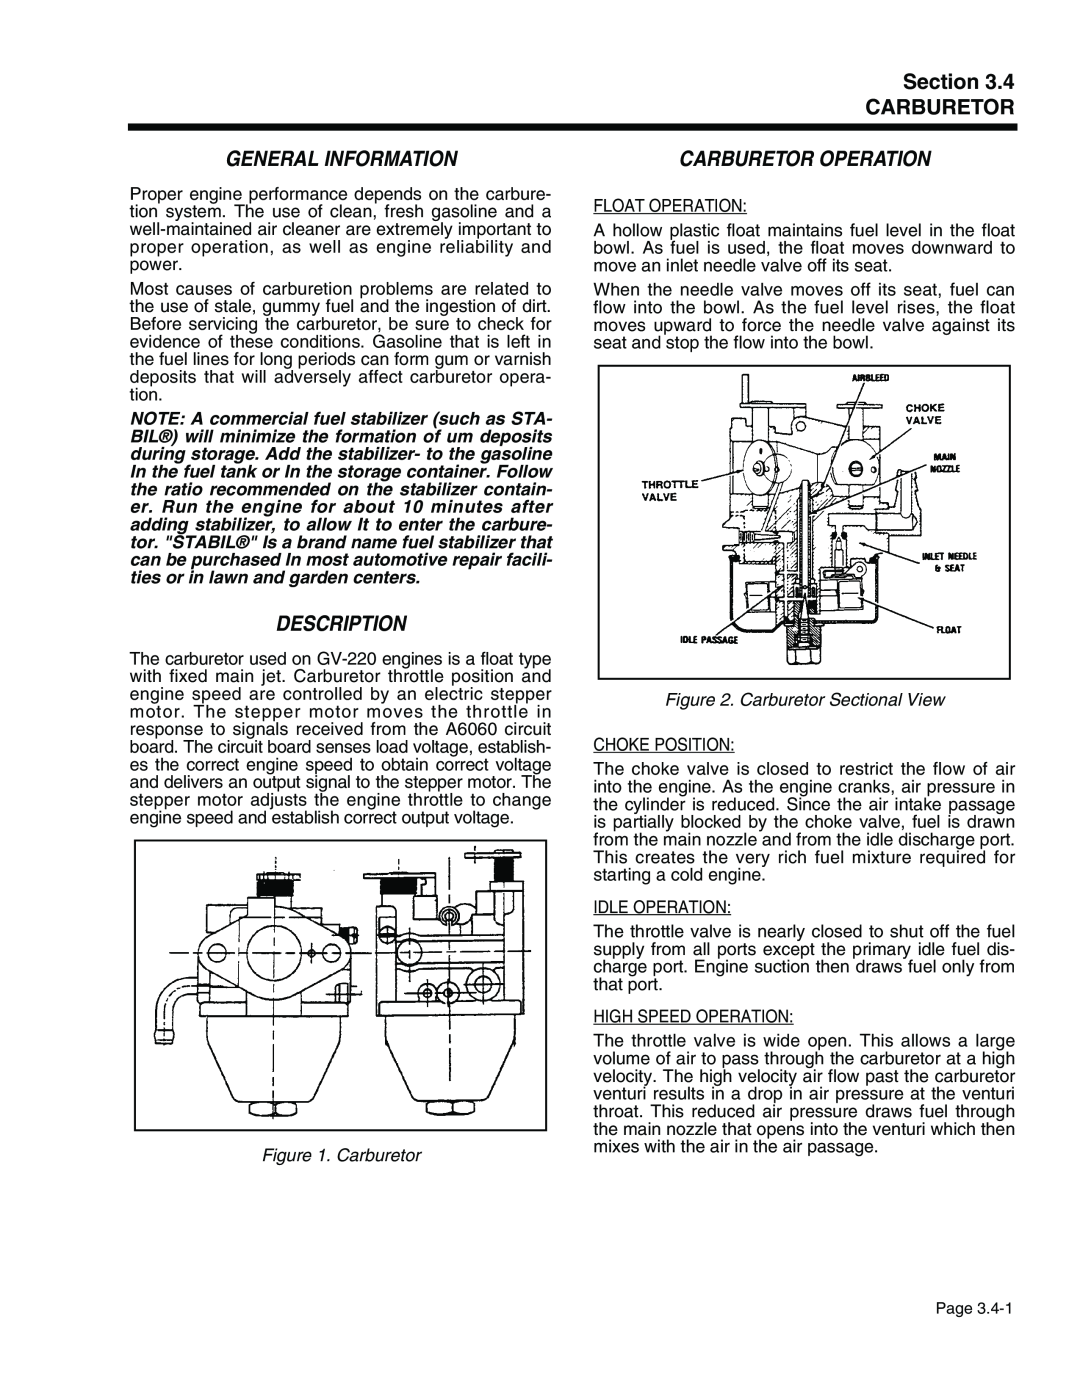 Generac Power Systems 941-2, 940-2 service manual Section CARBURETOR, General Information, Description, Carburetor Operation 